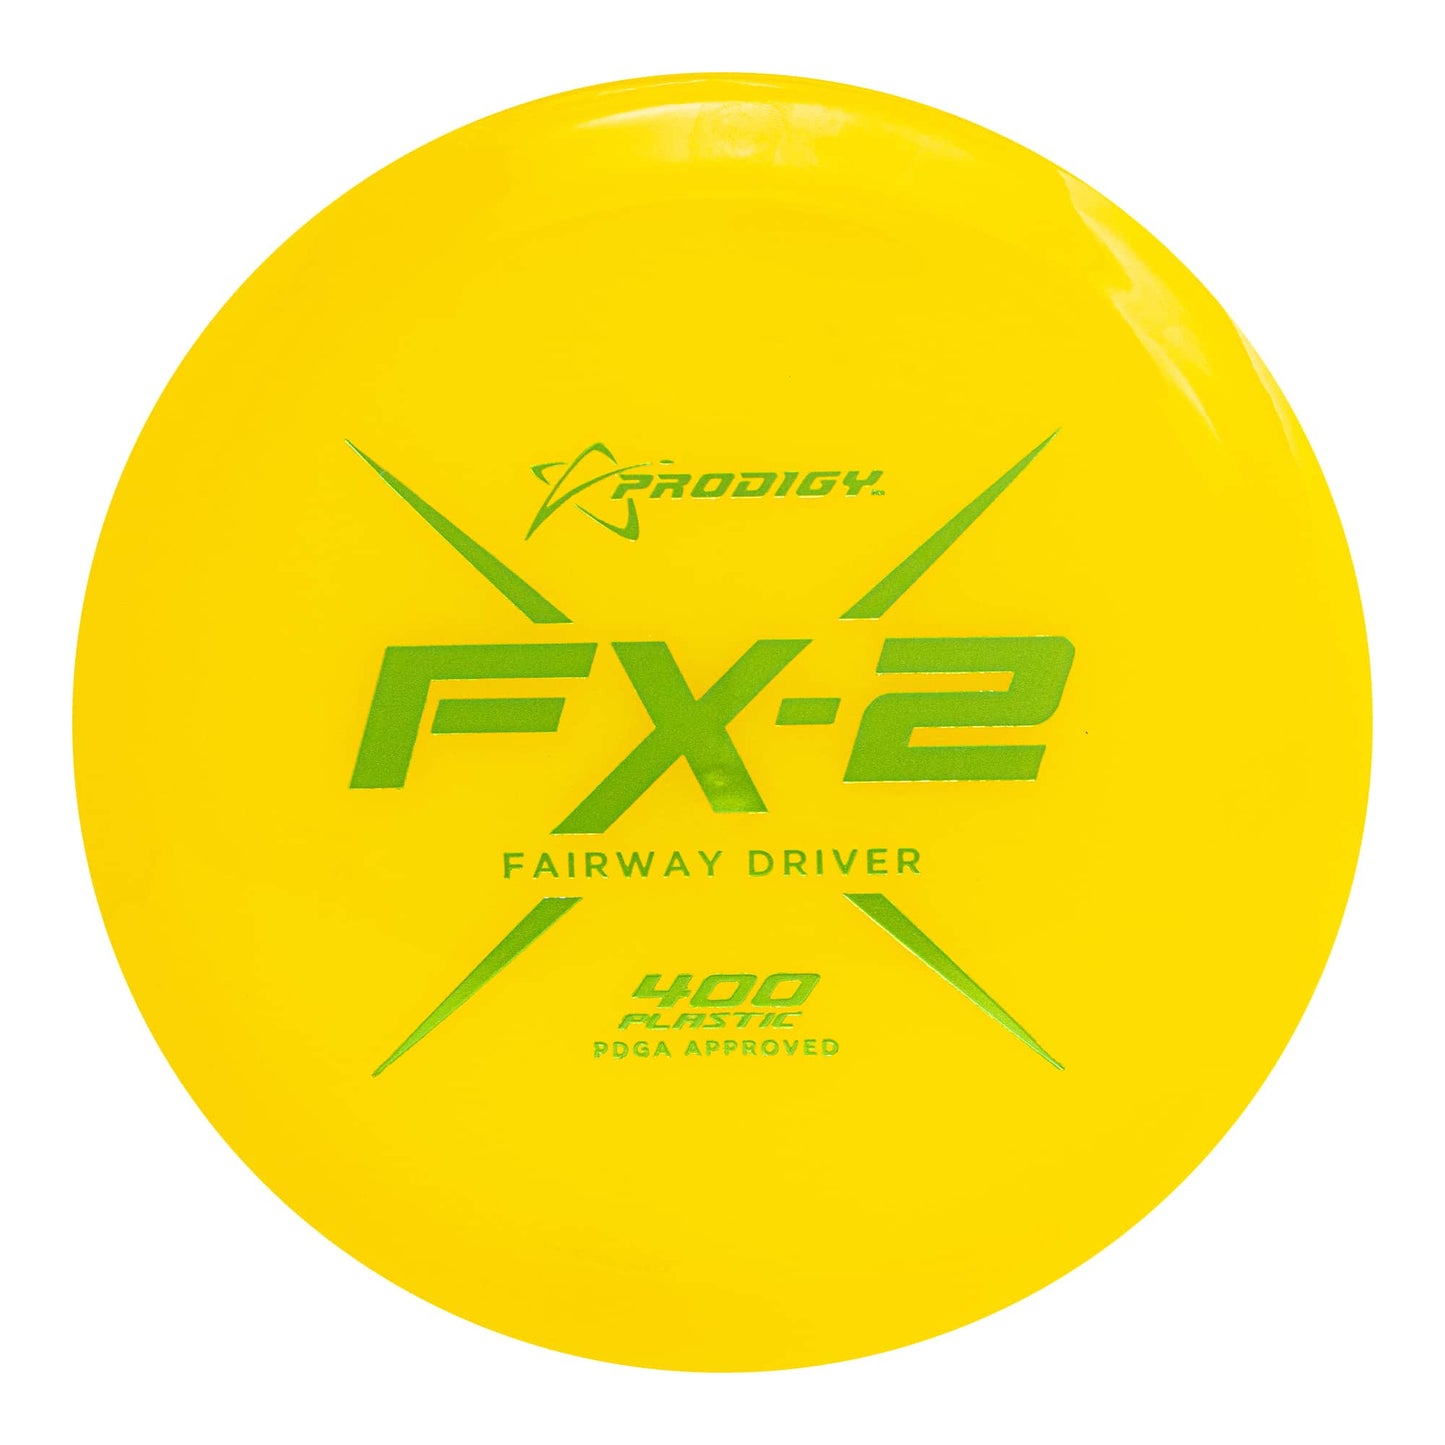 Prodigy FX-2 Fairway Driver - 400 Plastic